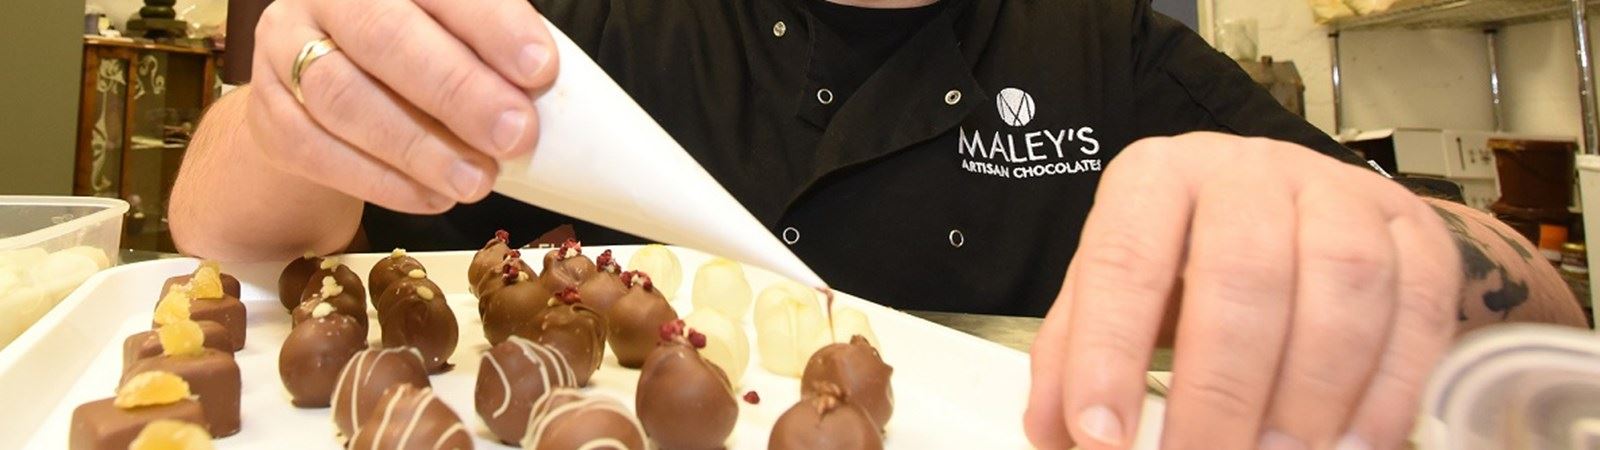 Maleys Chocolate|Chocolate Manufacturer Scotland|Visit Falkirk